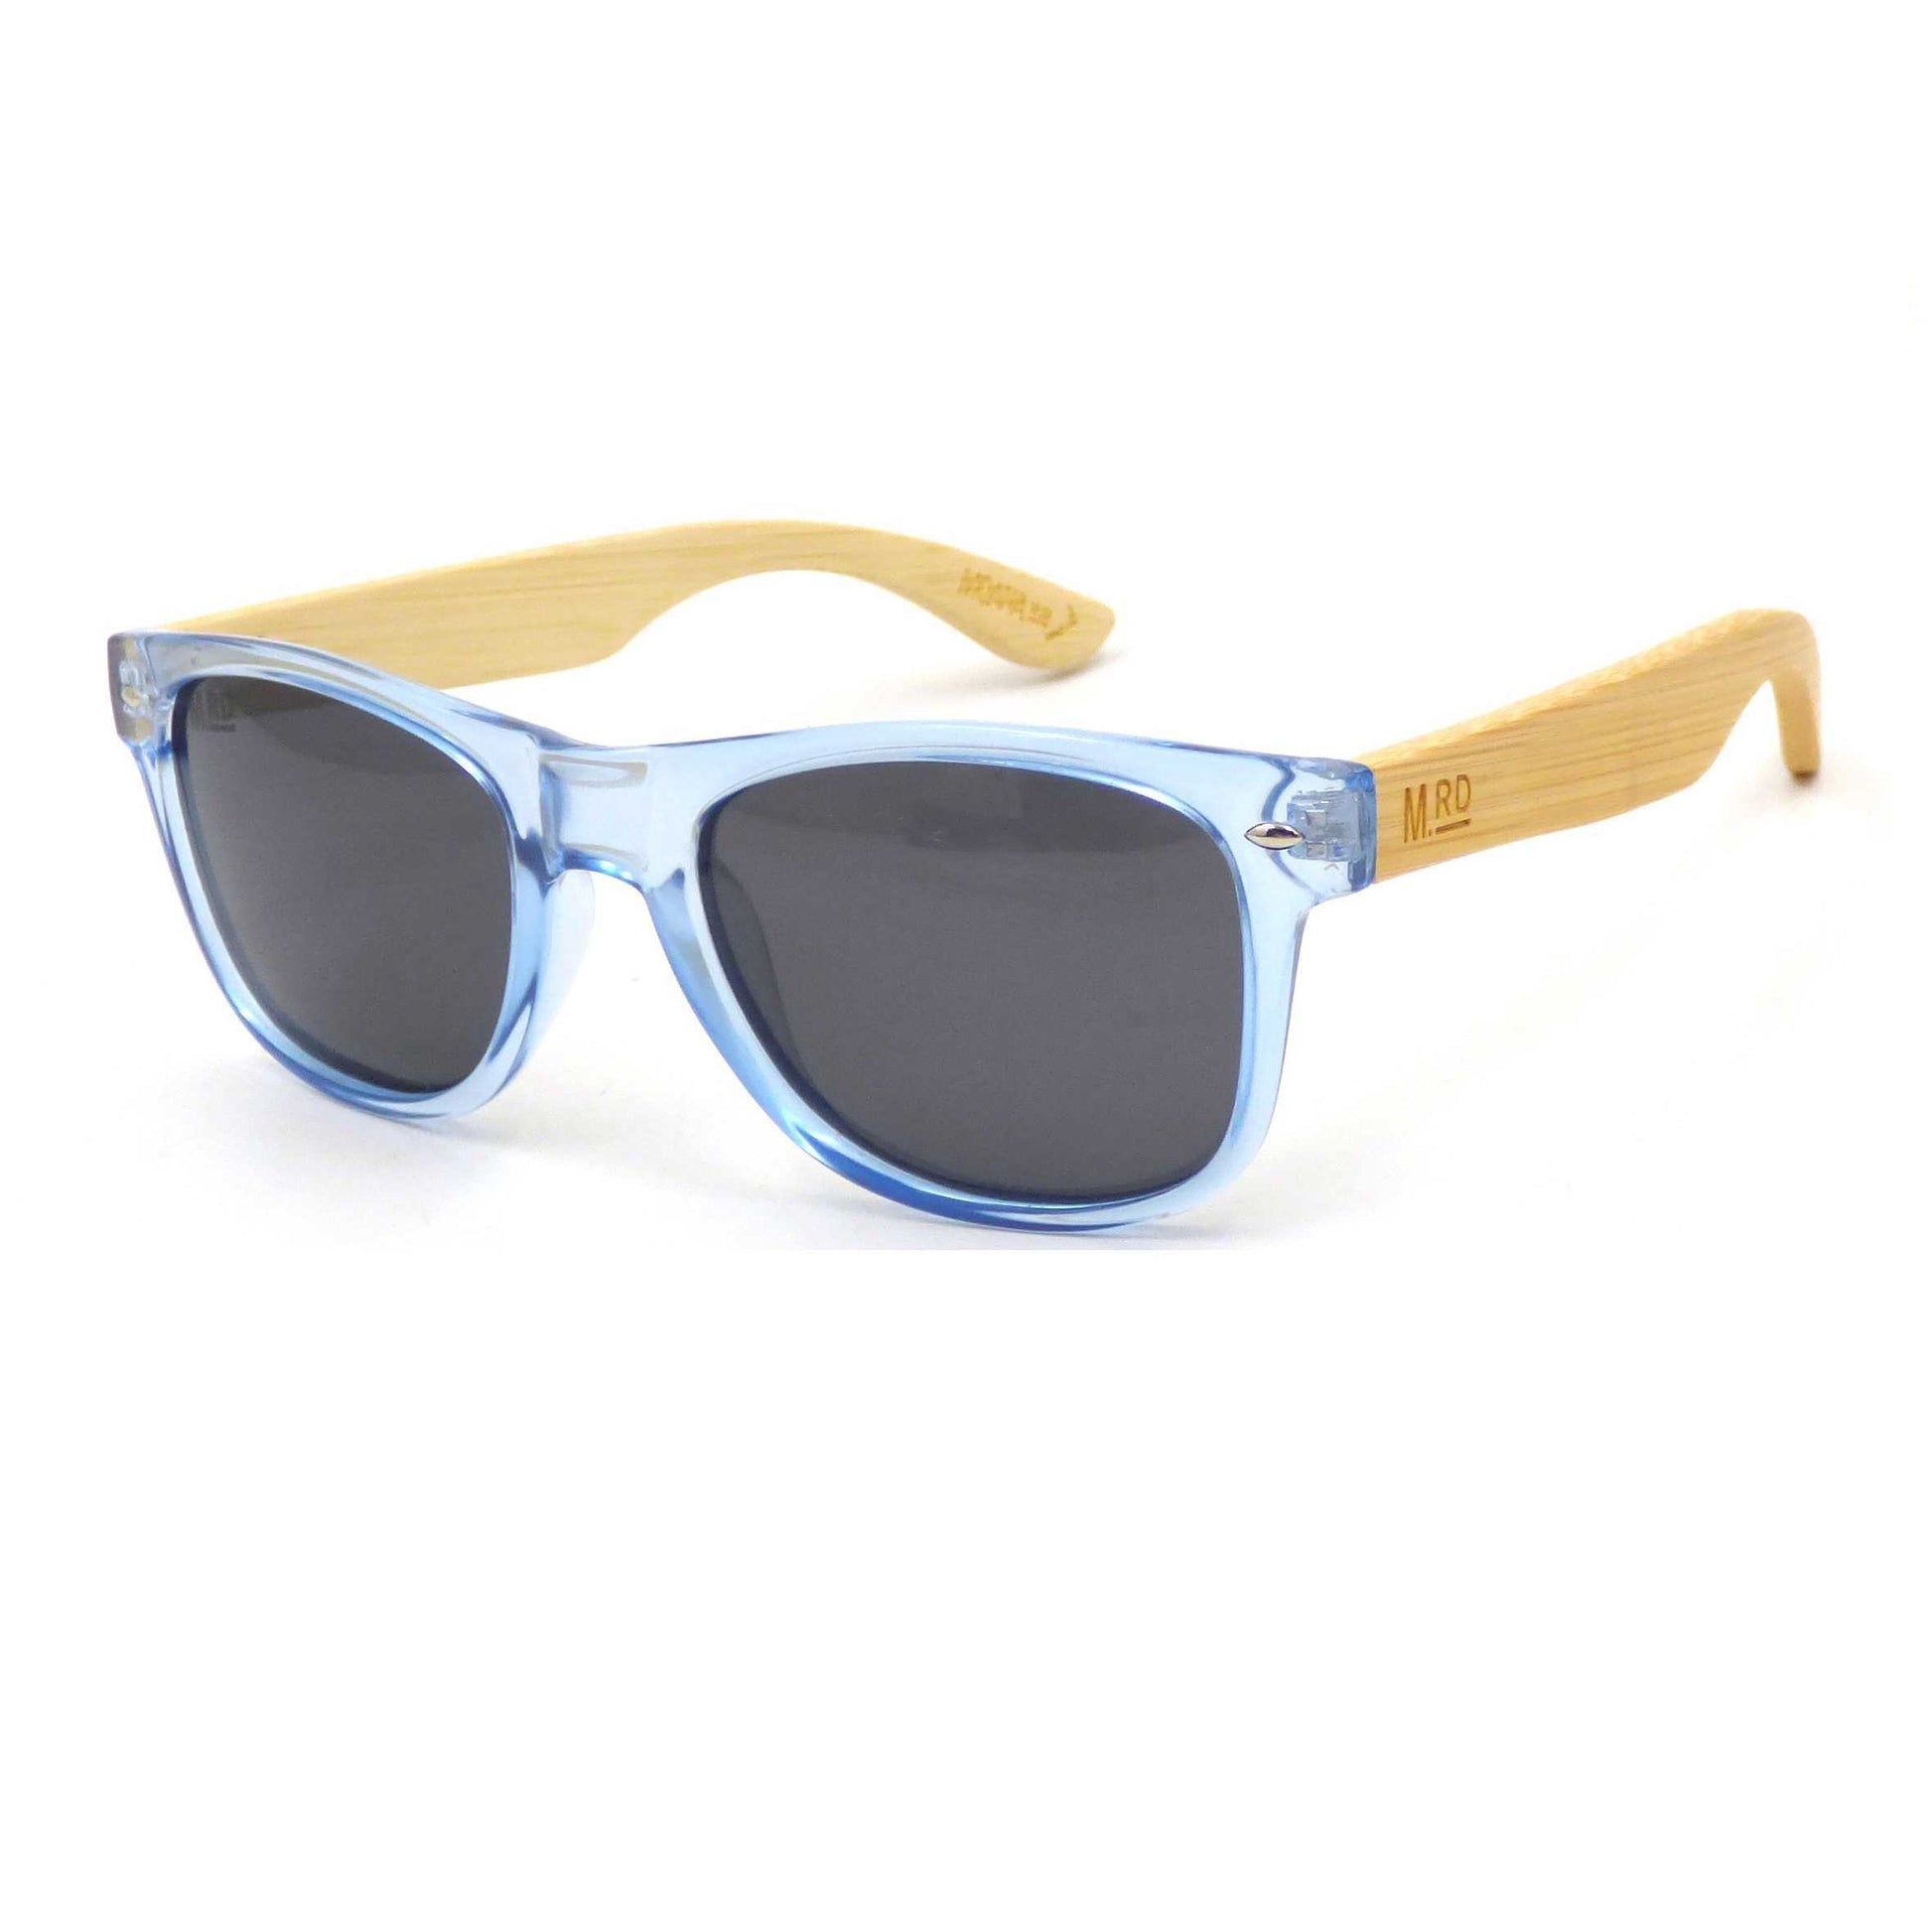 Moana Road 50/50 Ice Blue & Wood Arms Sunglasses